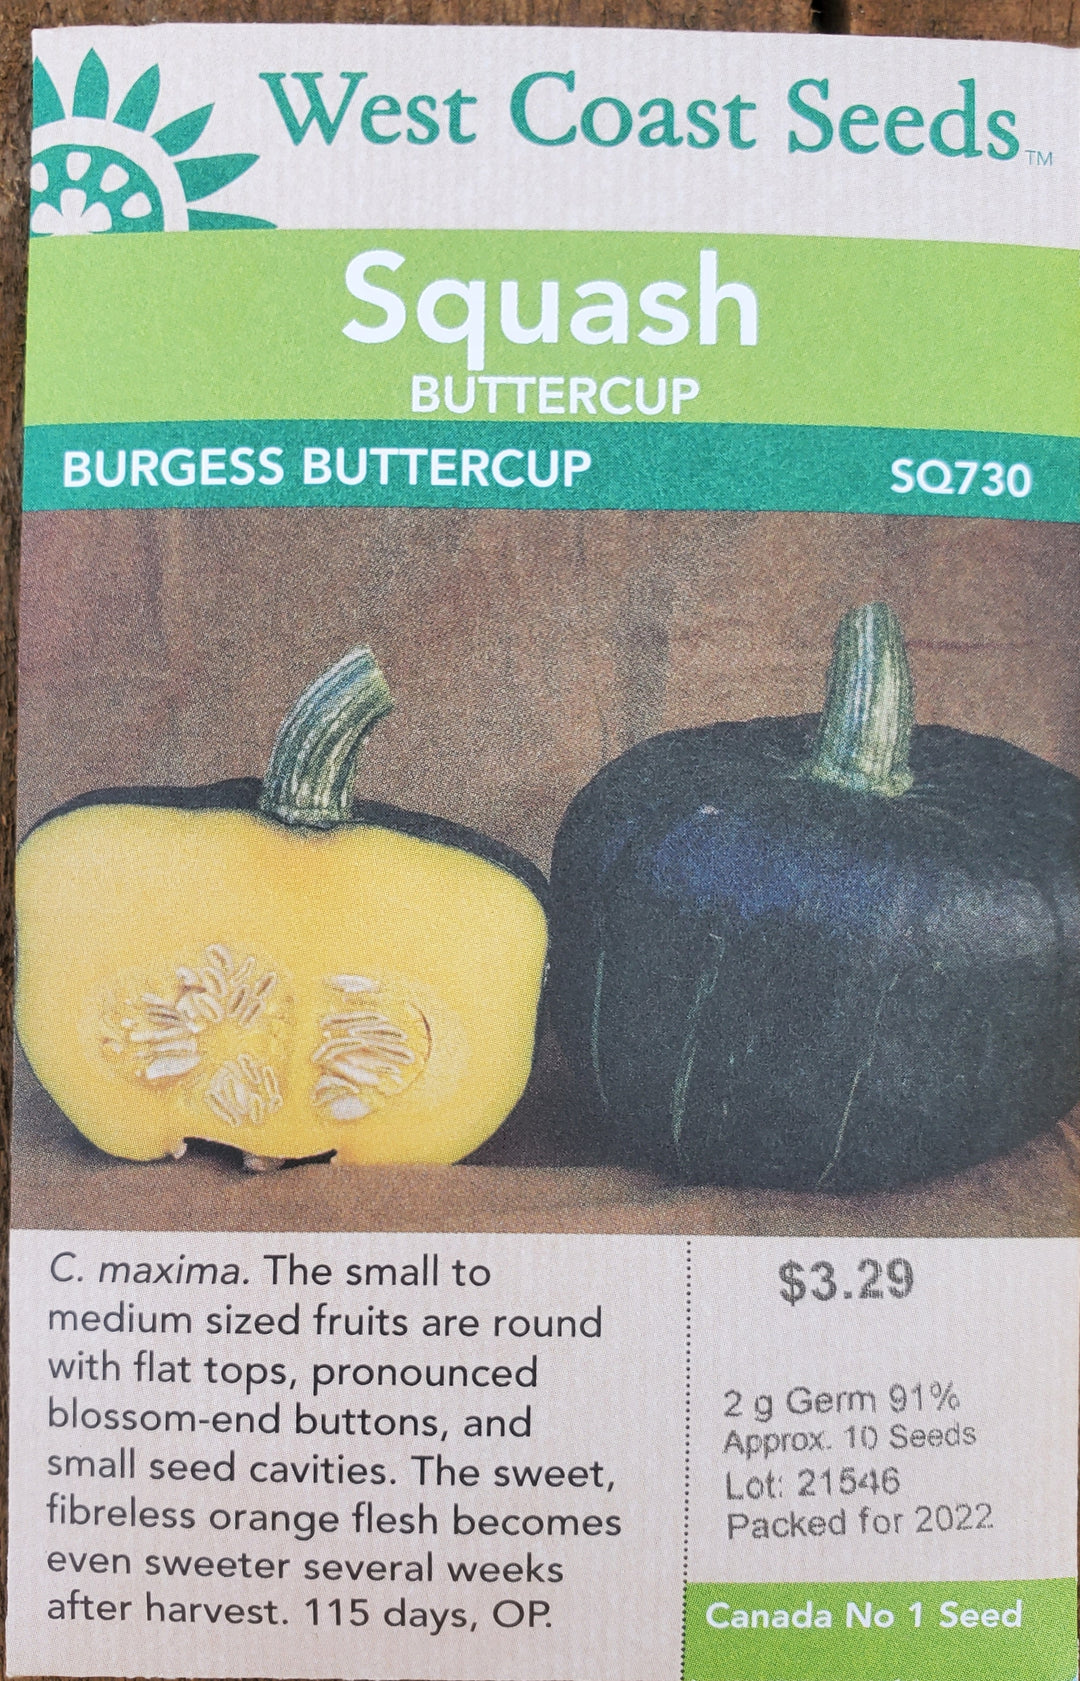 Buttercup Squash Seeds - Burgess Buttercup